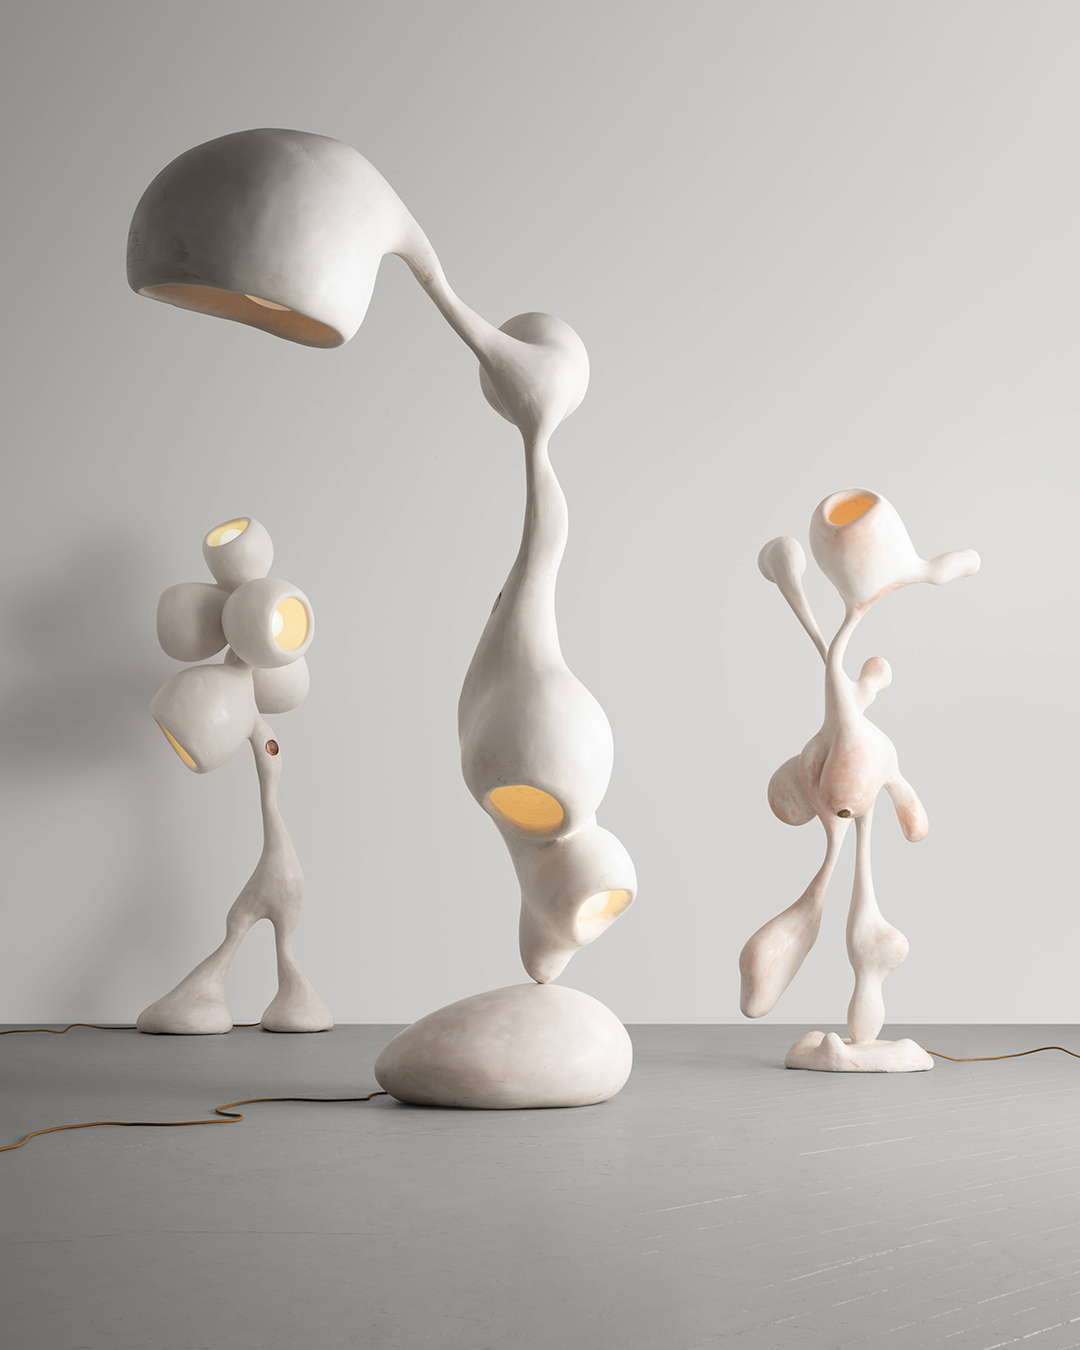 Lamp designs by Rogan Gregory